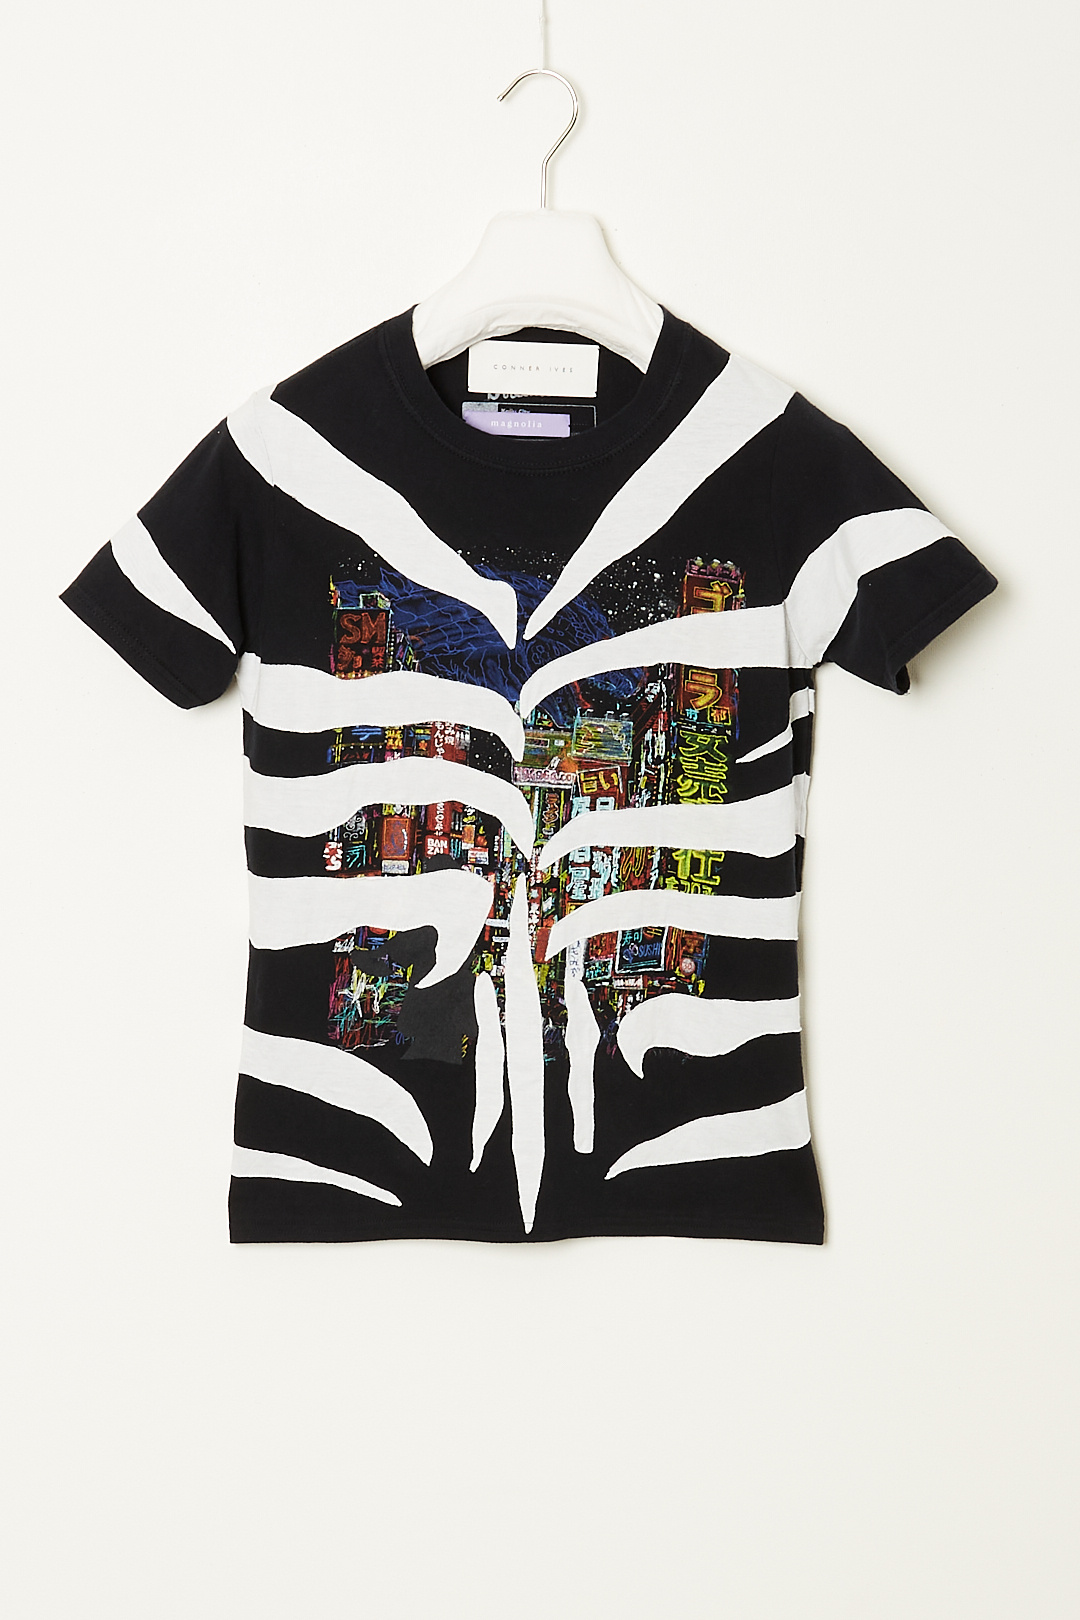 R&K Originals Shirt - Zebra Print- black and white - size Medium